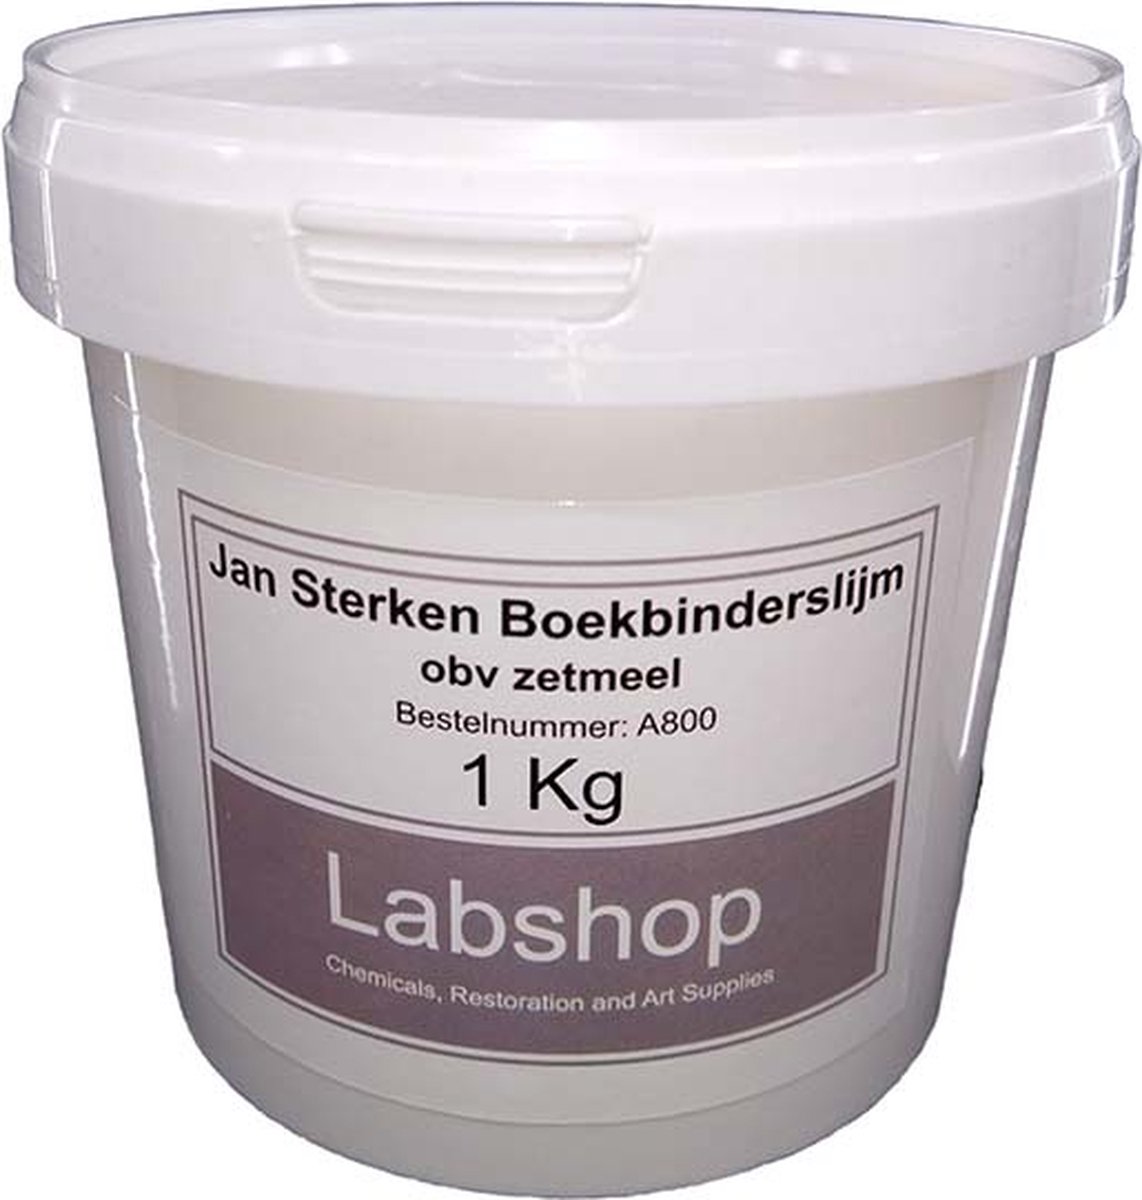 Labshop - Jan Sterkenlijm - Boekbinderslijm obv zetmeel 1 kilogram